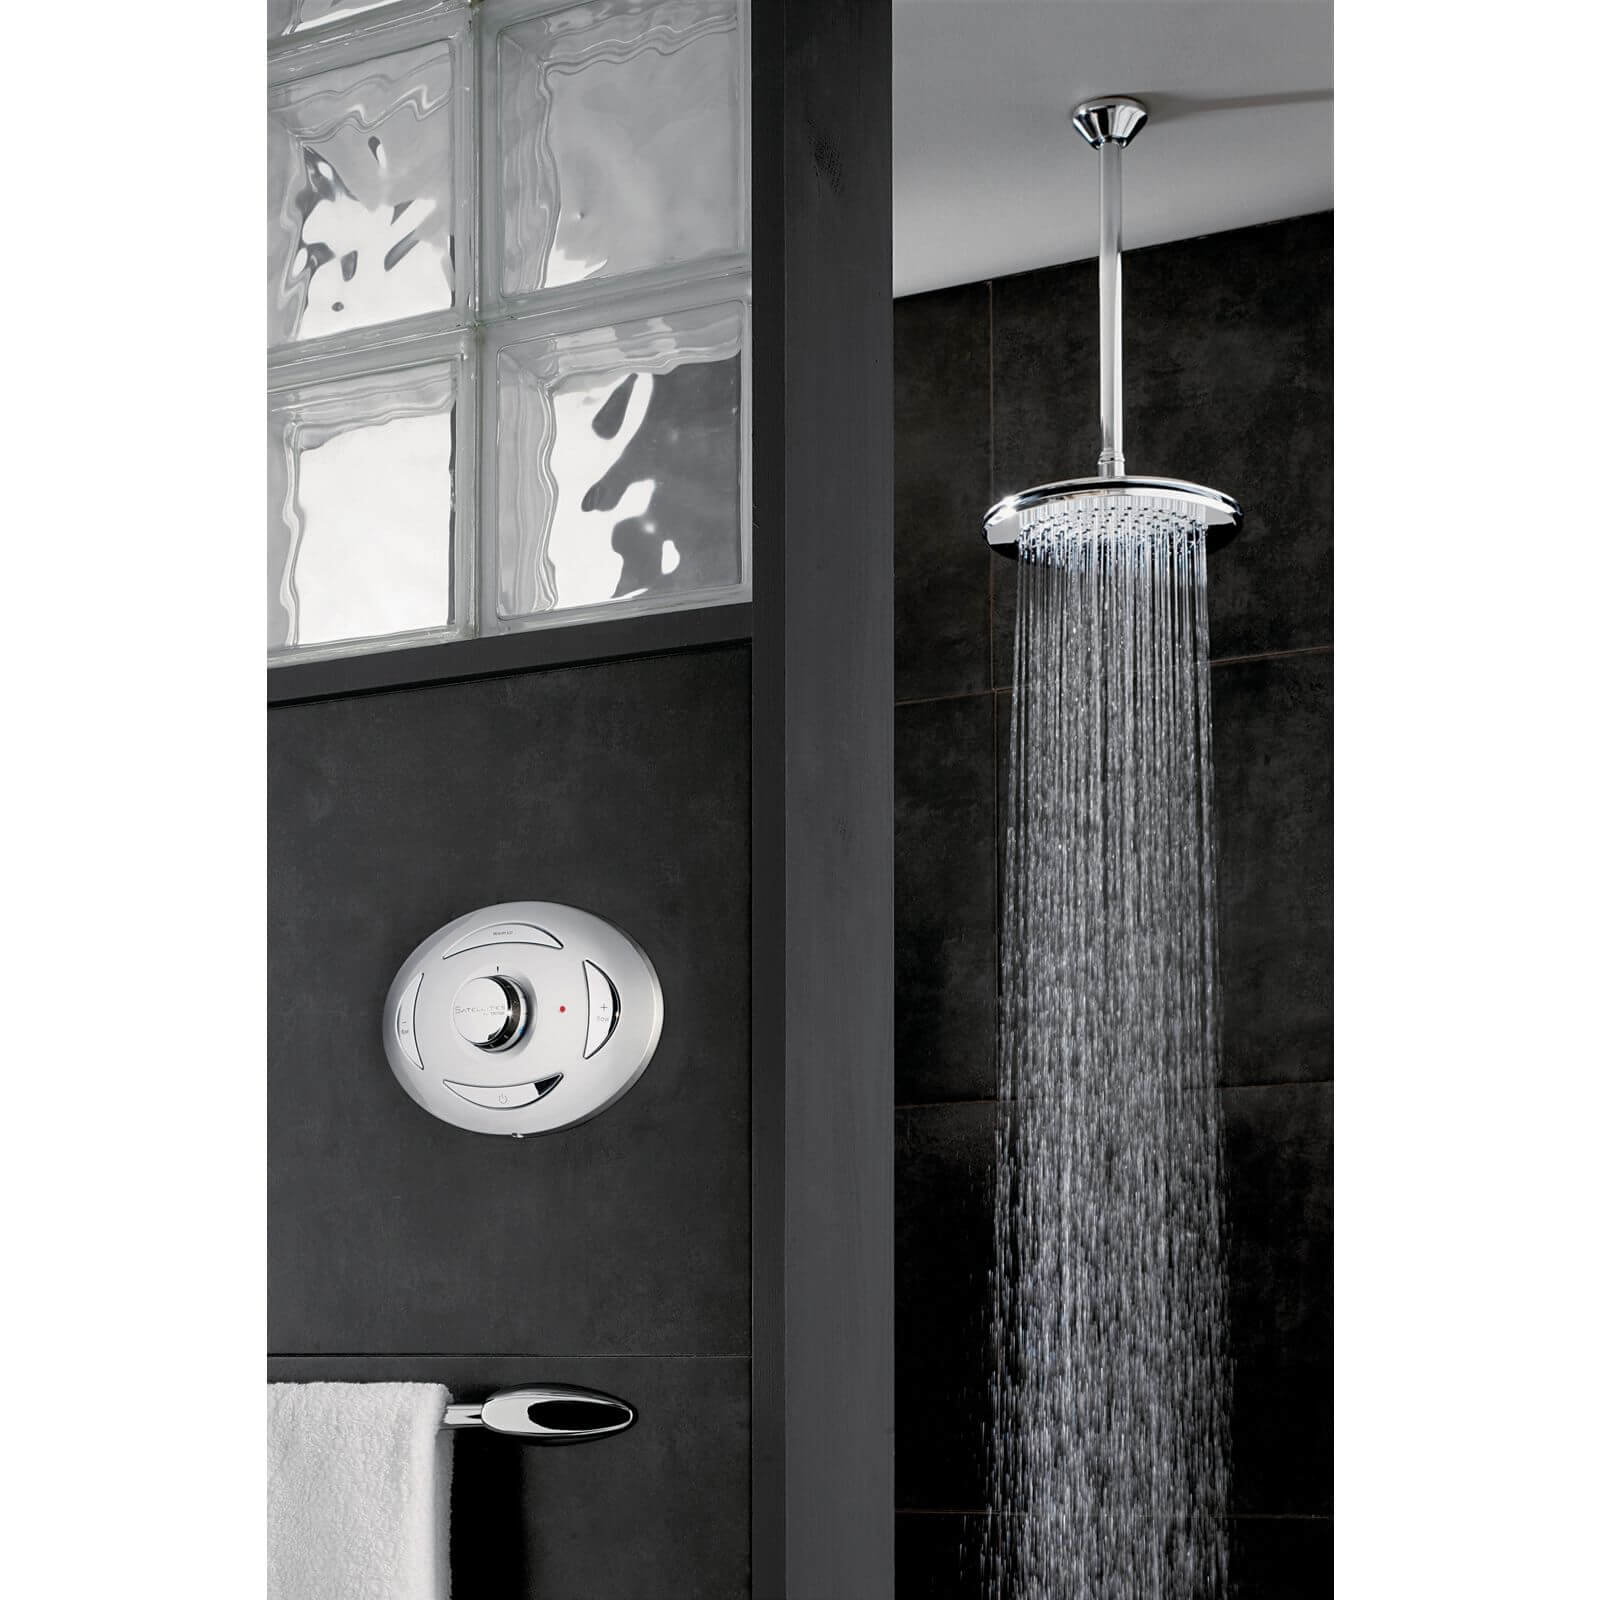 Triton Digital Mixer Shower With Fixed Showerhead - Unpumped